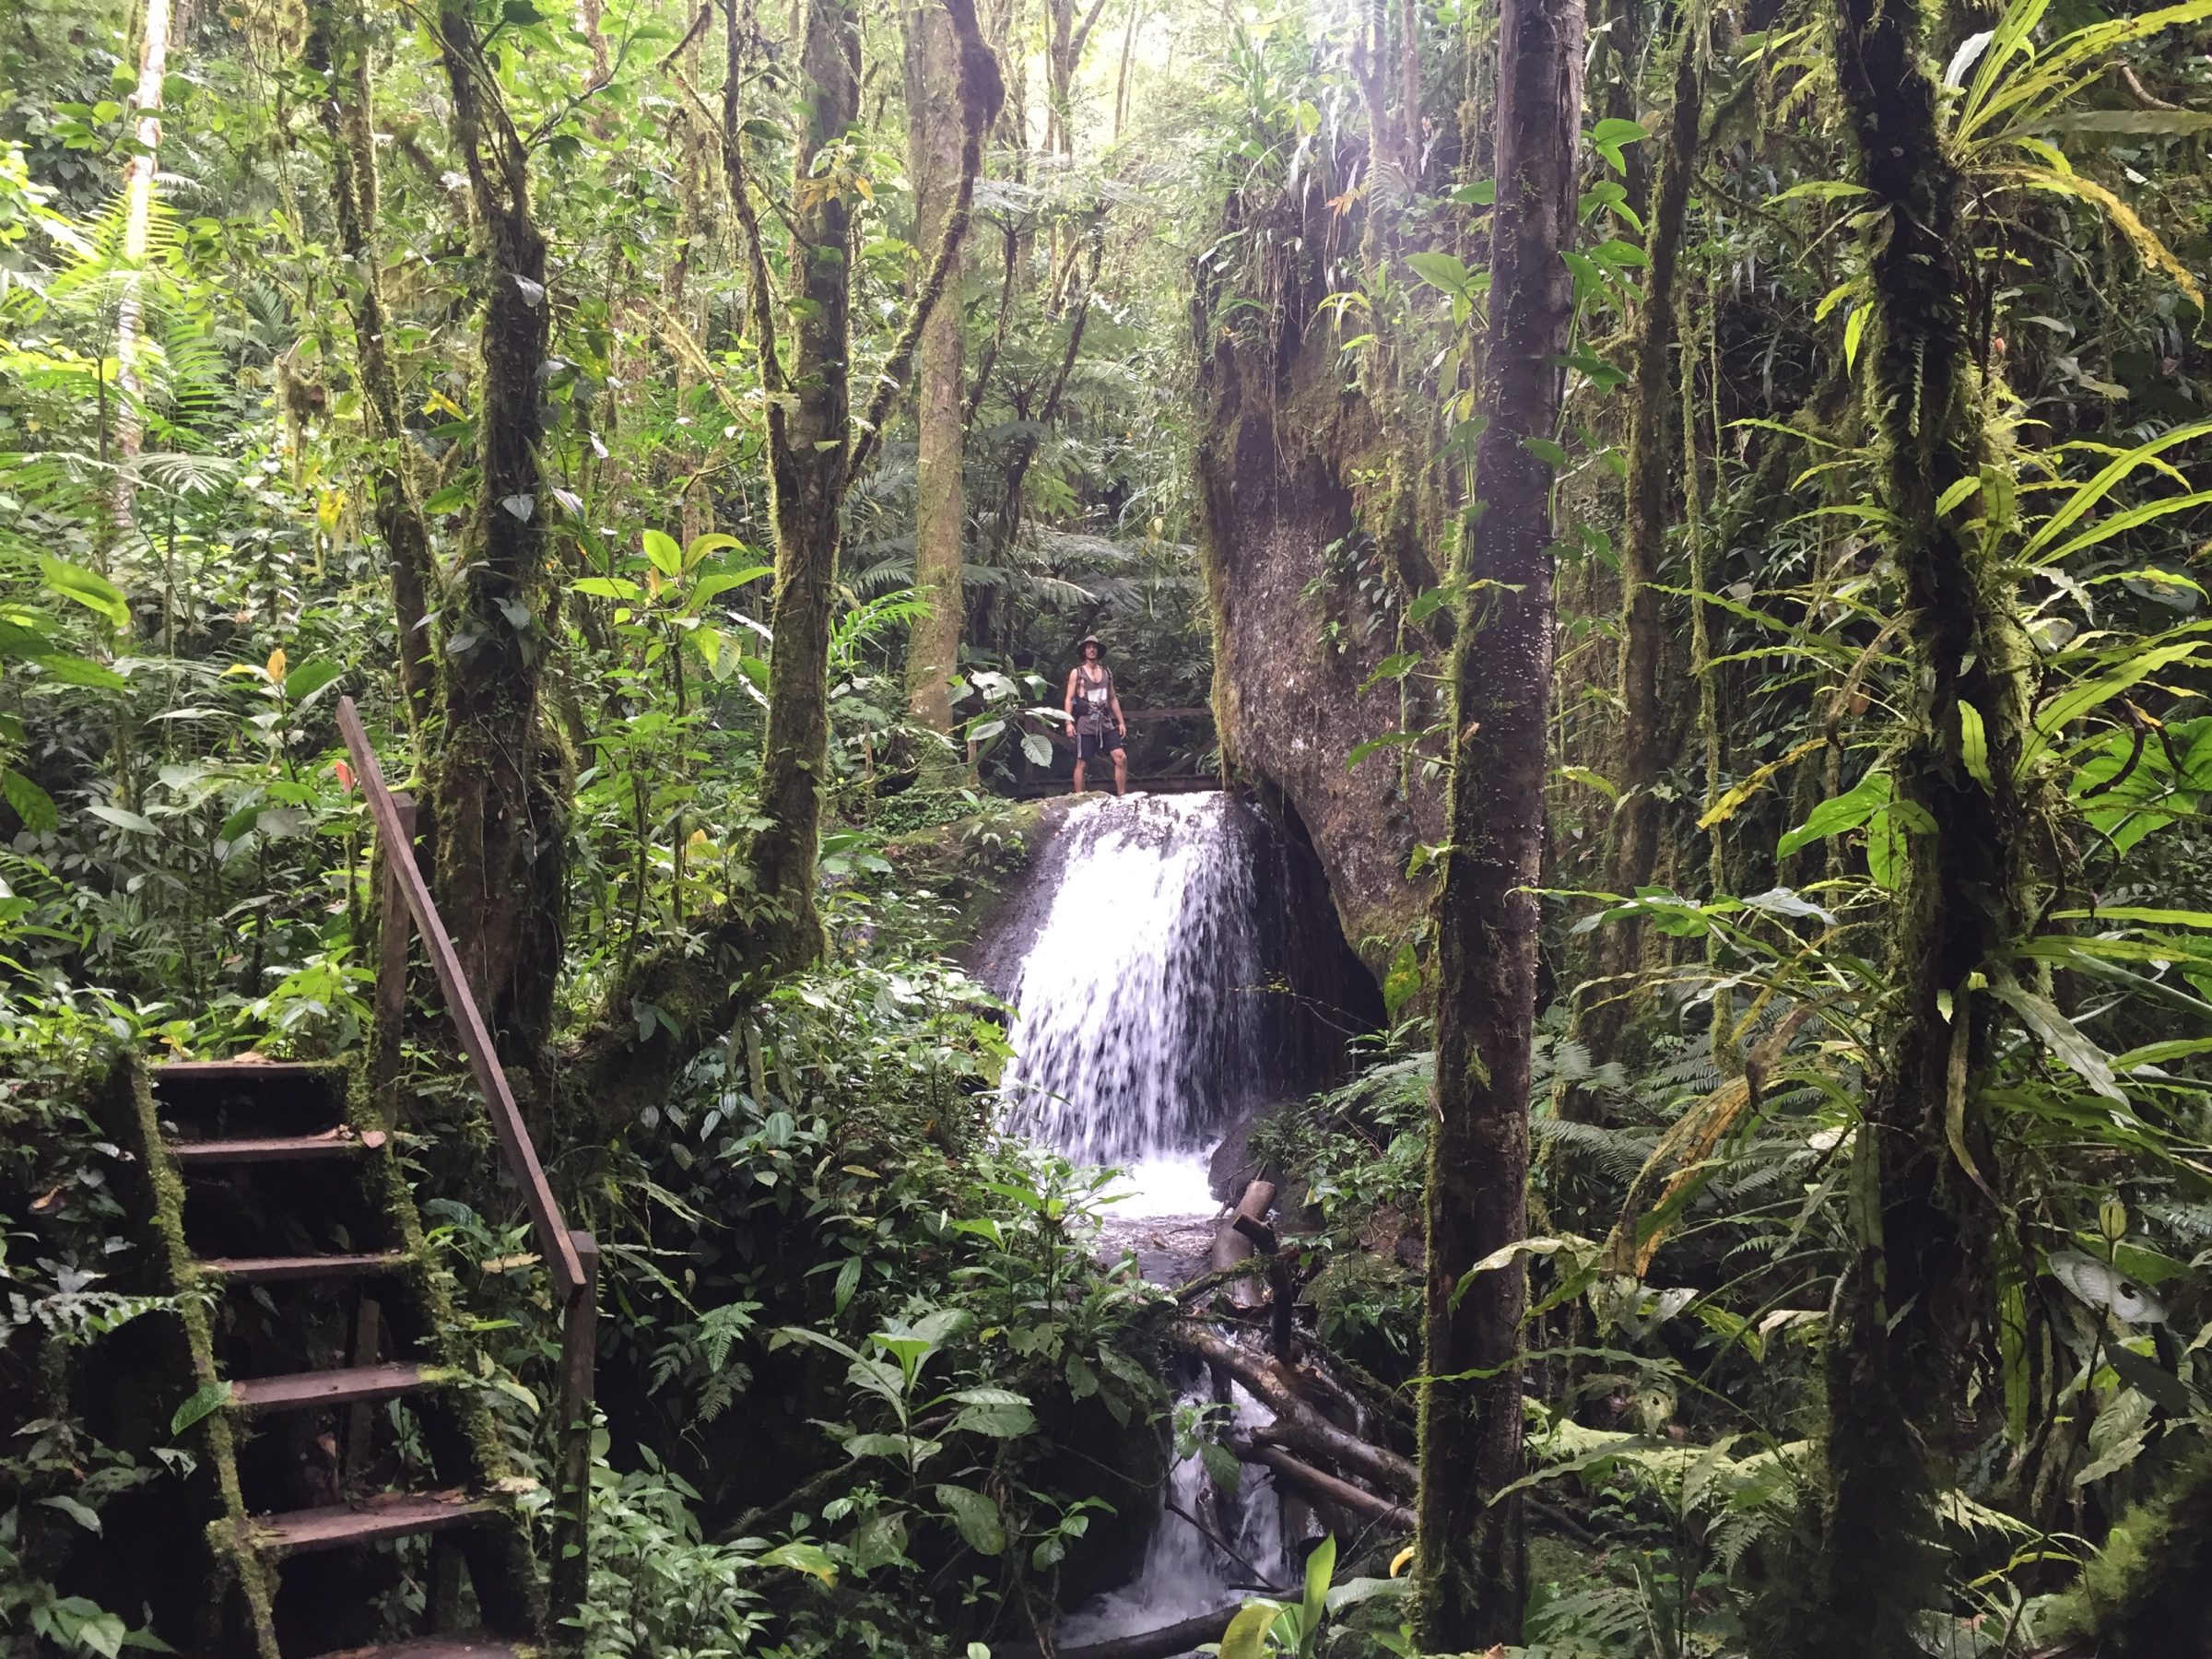 Vodopád z deštného pralesa během túry k vodopádu | Prohlídka a la Casada, Penas Blancas